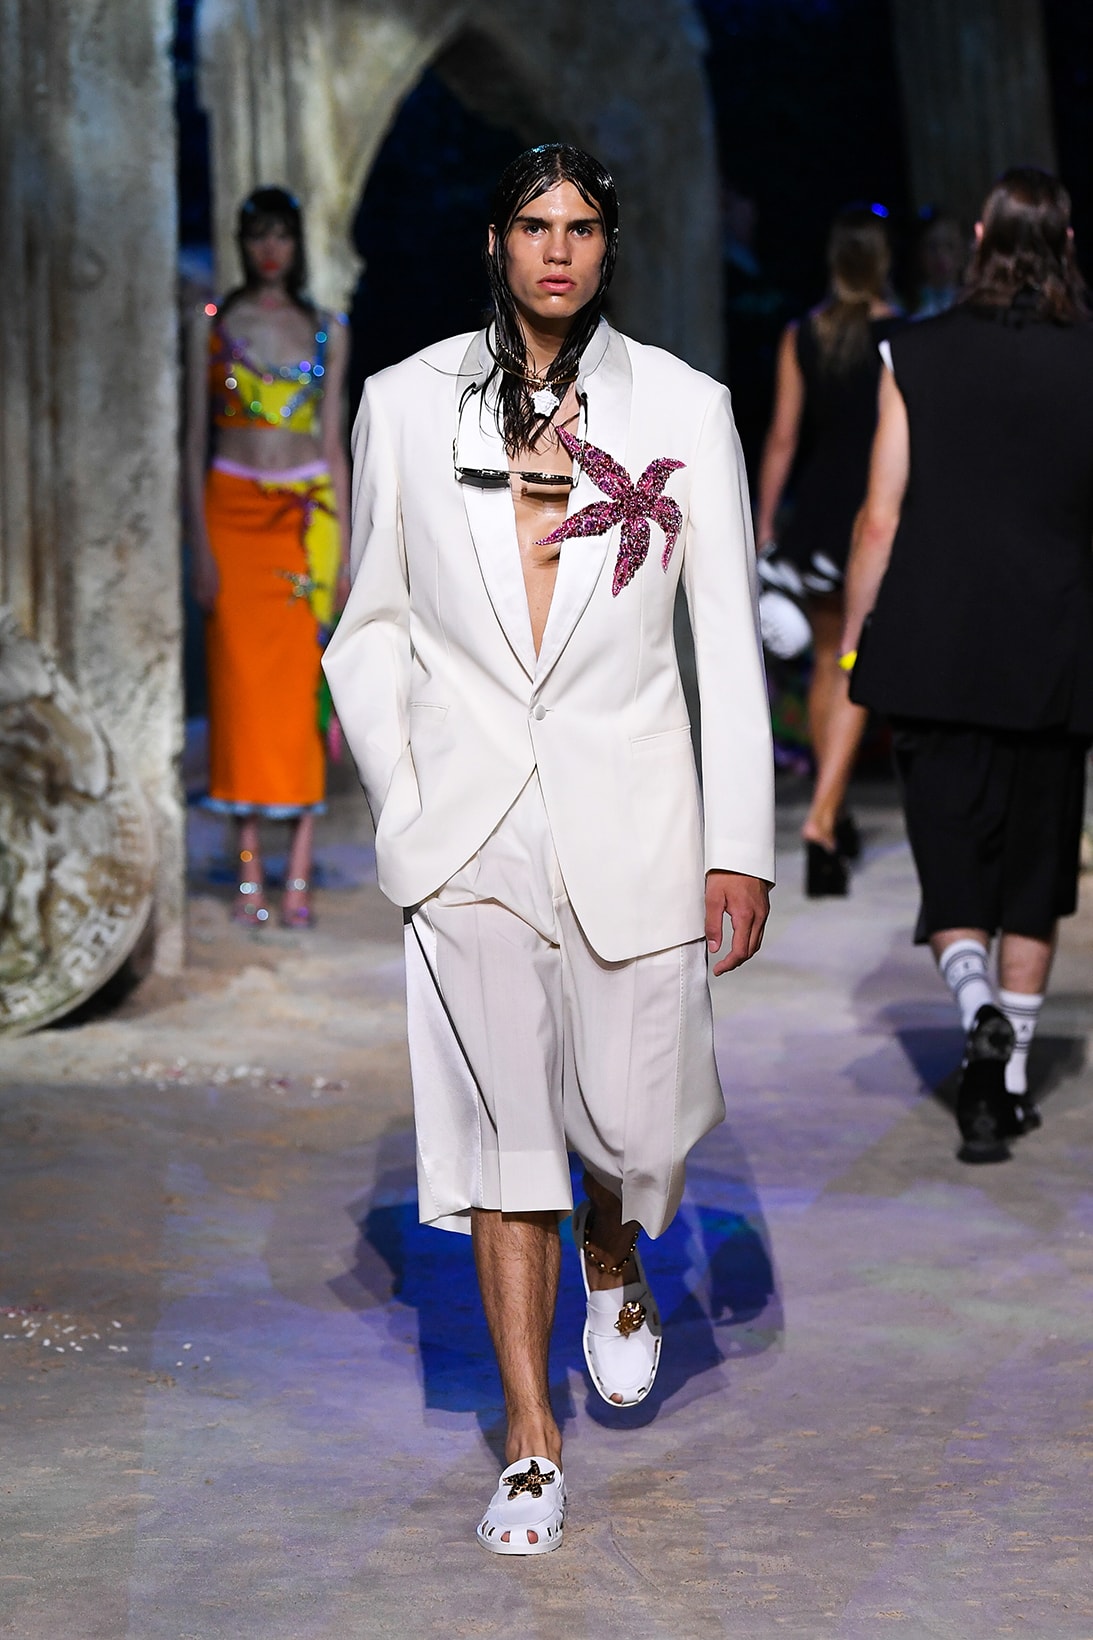 versace spring summer 2021 collection paris fashion week pfw adut akech irina shayk